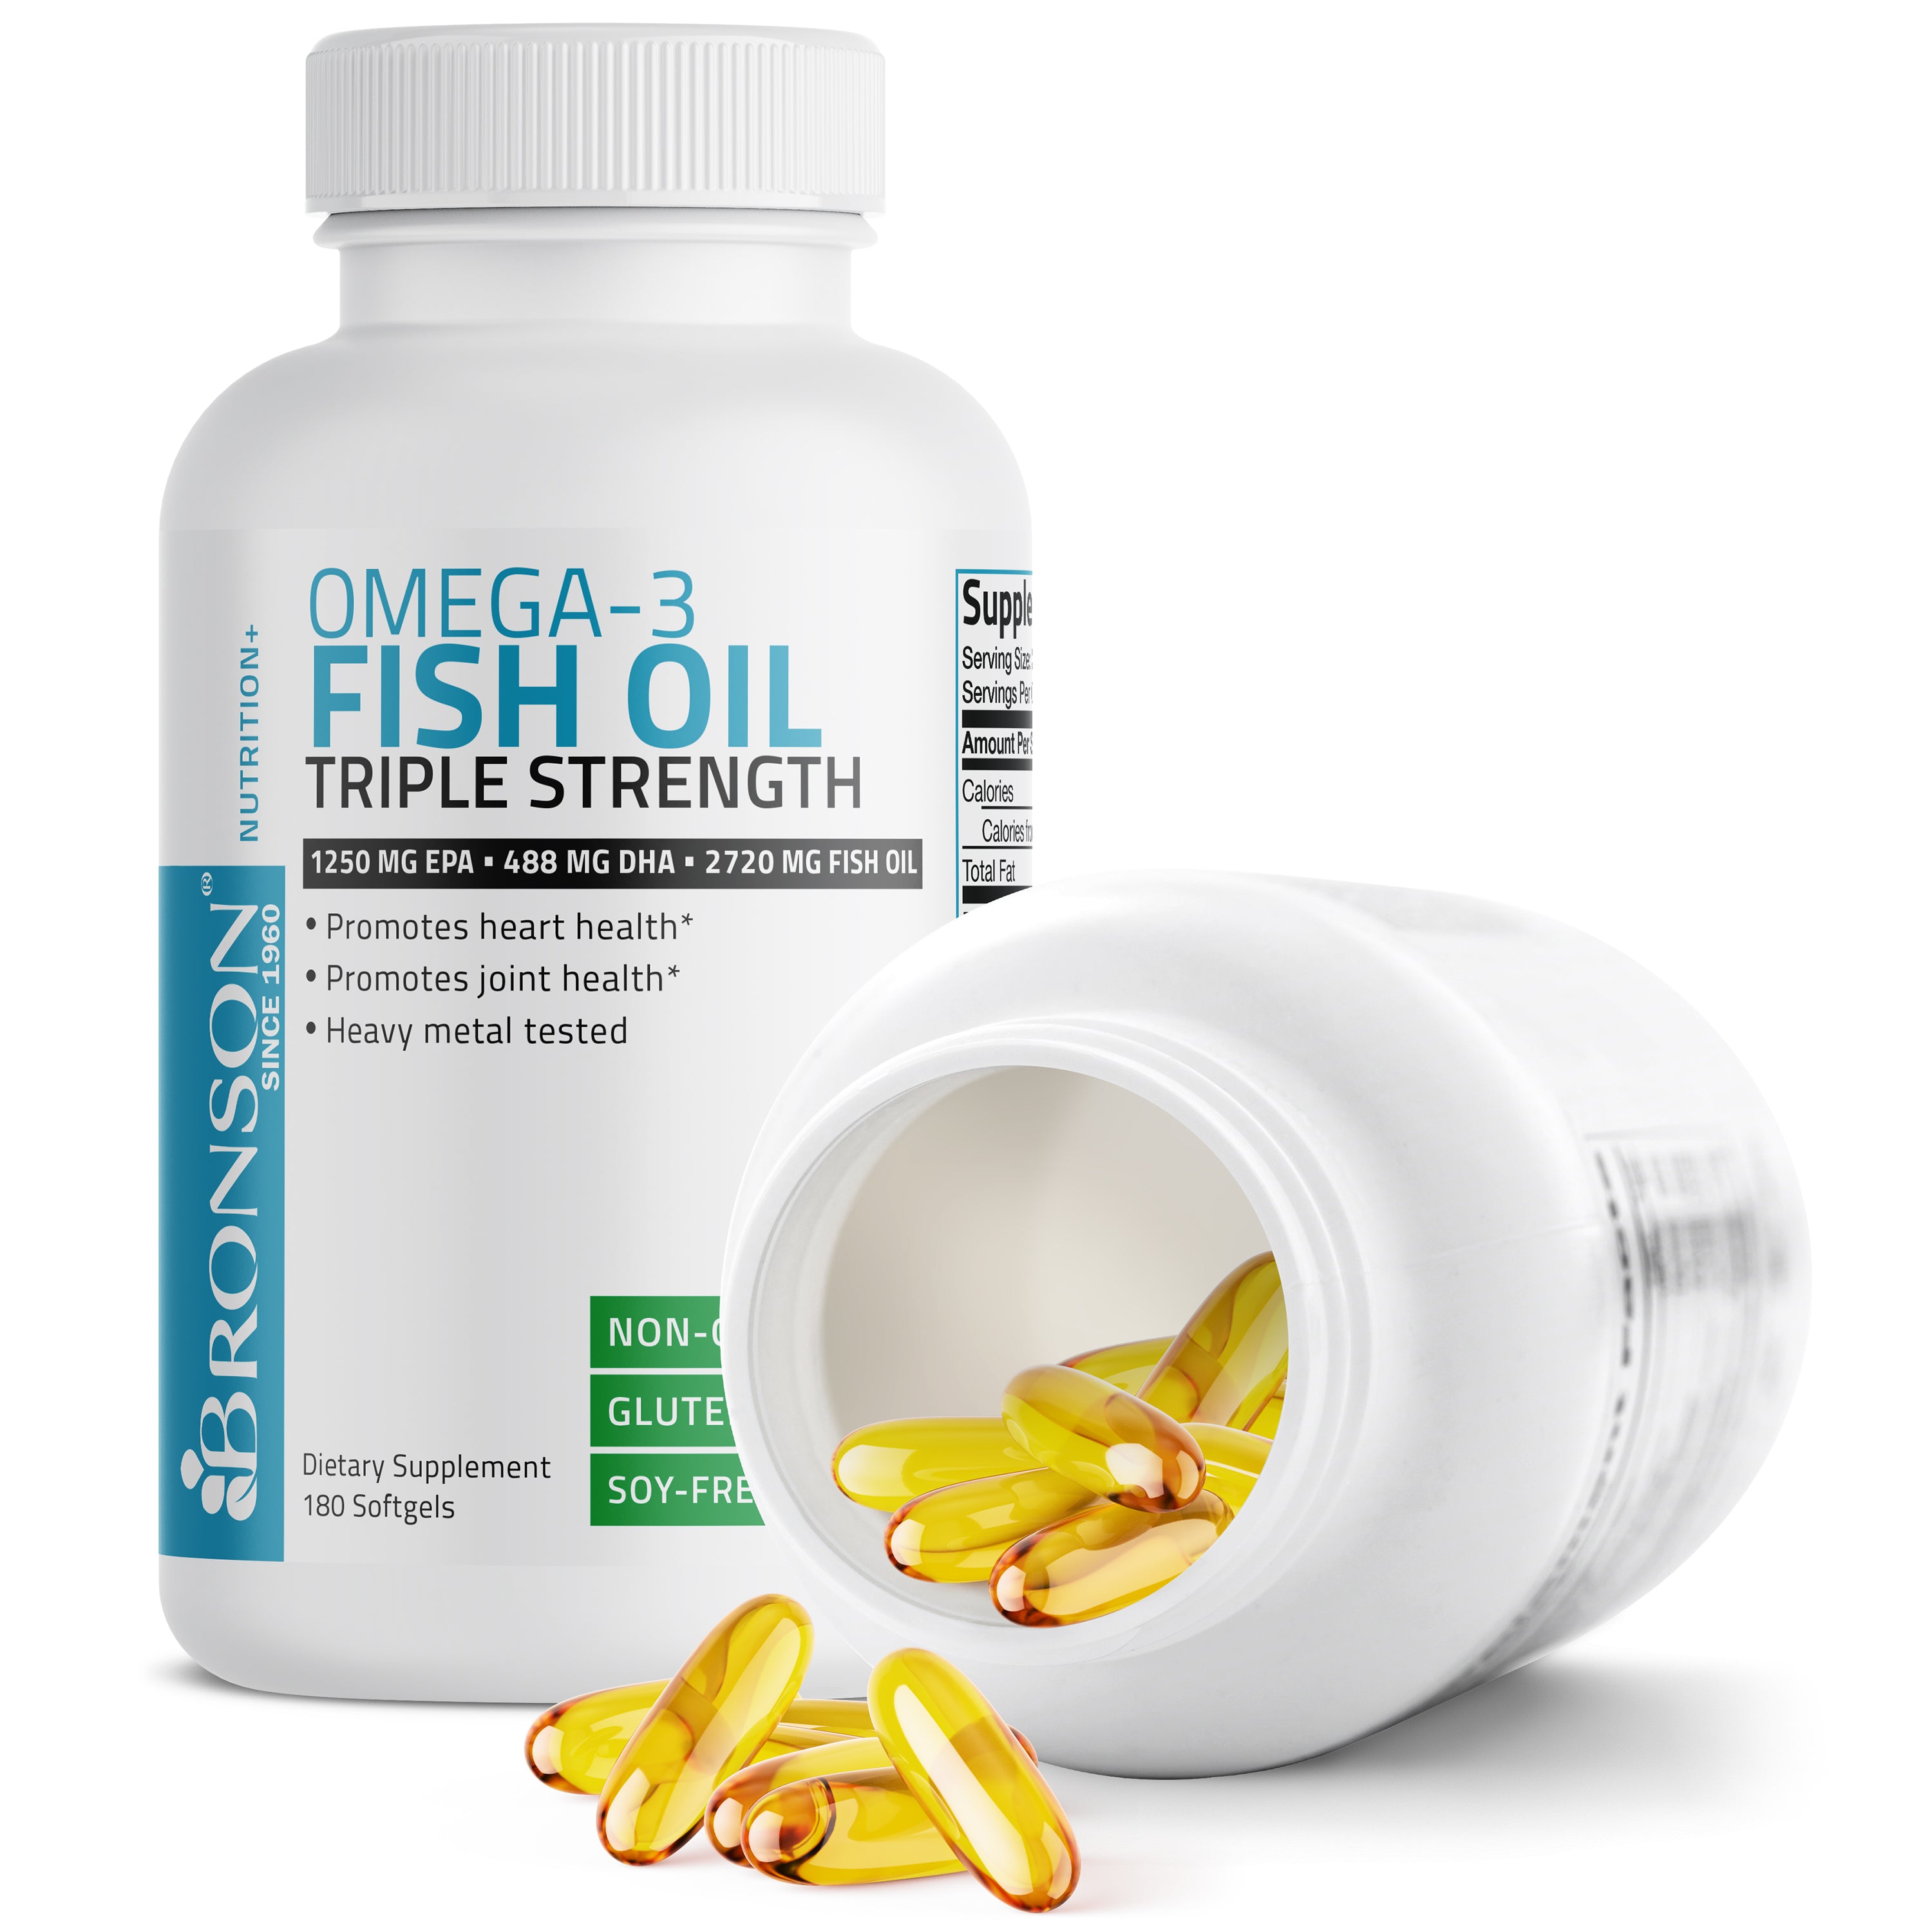 Omega-3 Fish Oil EPA DHA Triple Strength - 2,720 mg view 9 of 17